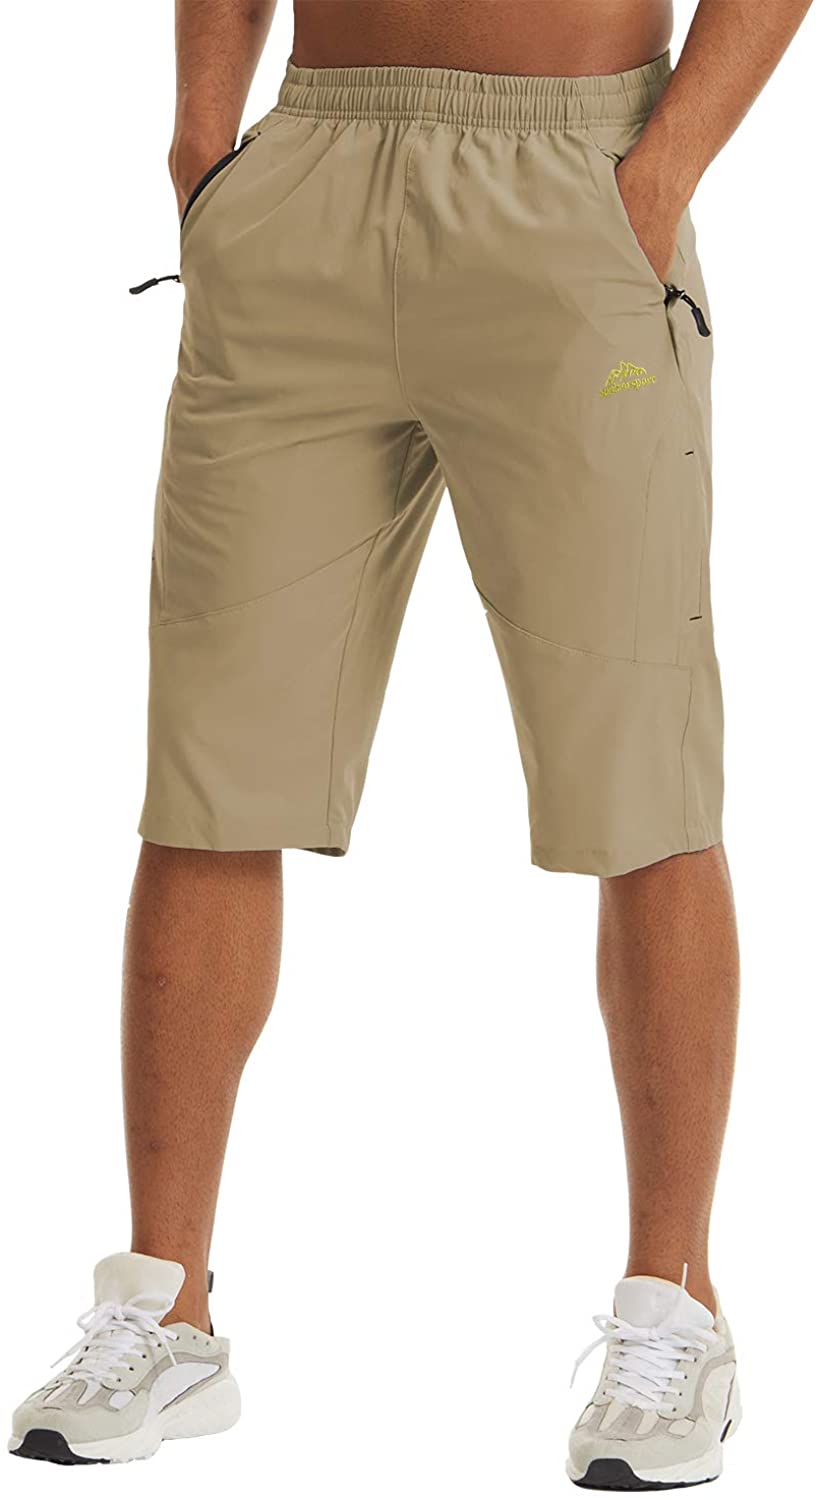 LASIUMIAT Men's 3/4 Capri Pants Outdoor Sports Hiking Cropped Shorts with Zipper Pockets 